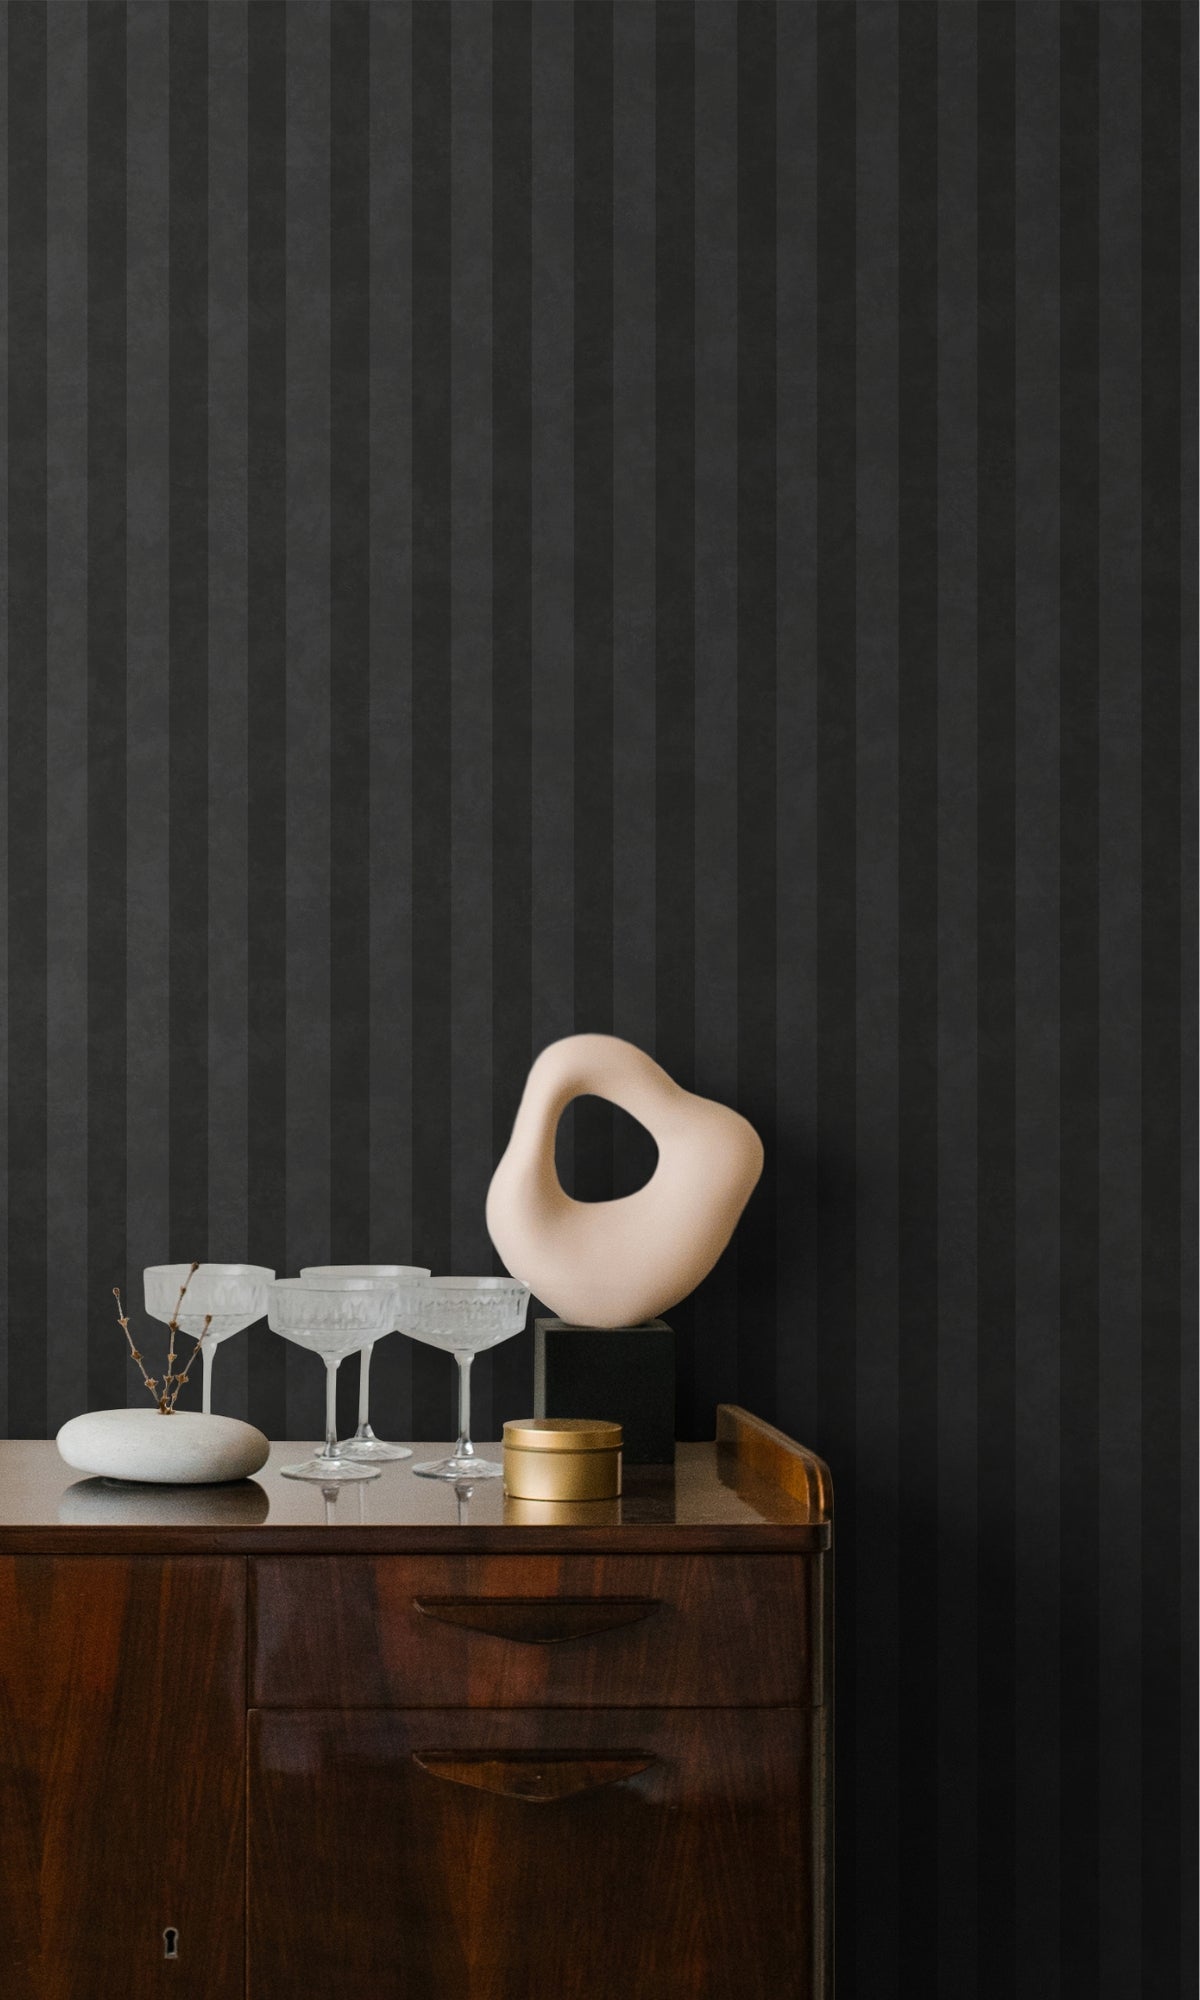 Charcoal Simple Geometric Stripes Wallpaper R8981